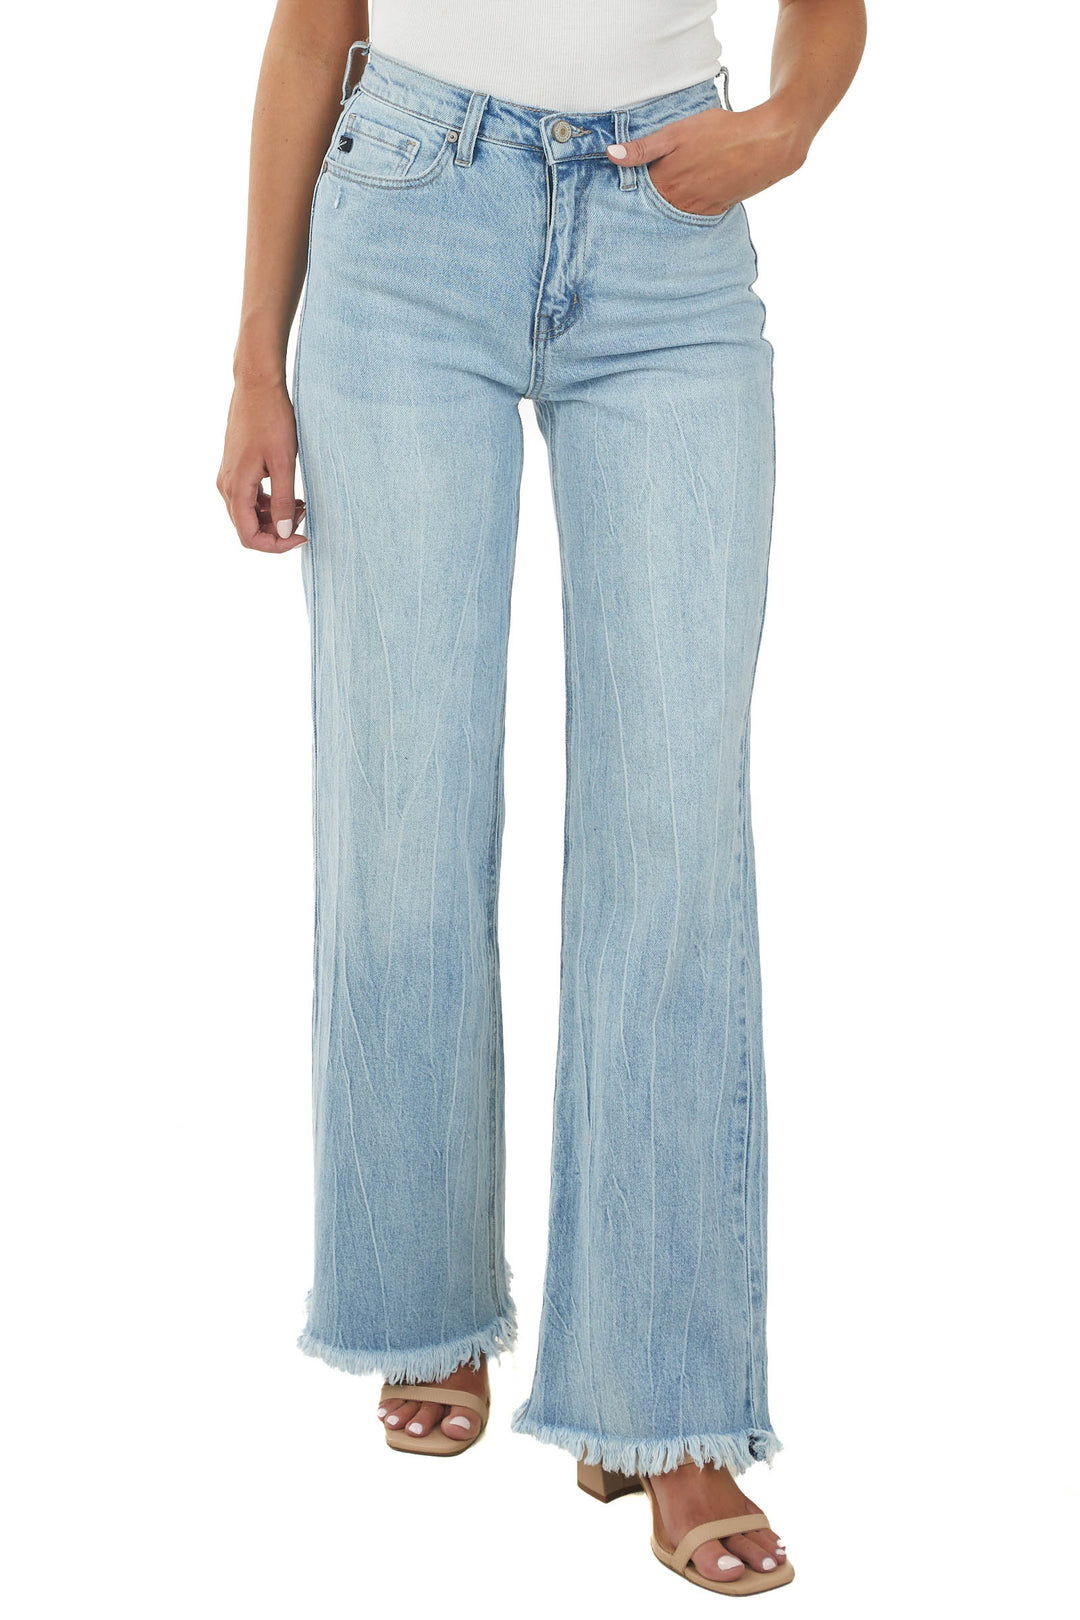 KanCan Medium Wash High Rise Flare Jeans with Fringe Hem & Lime Lush